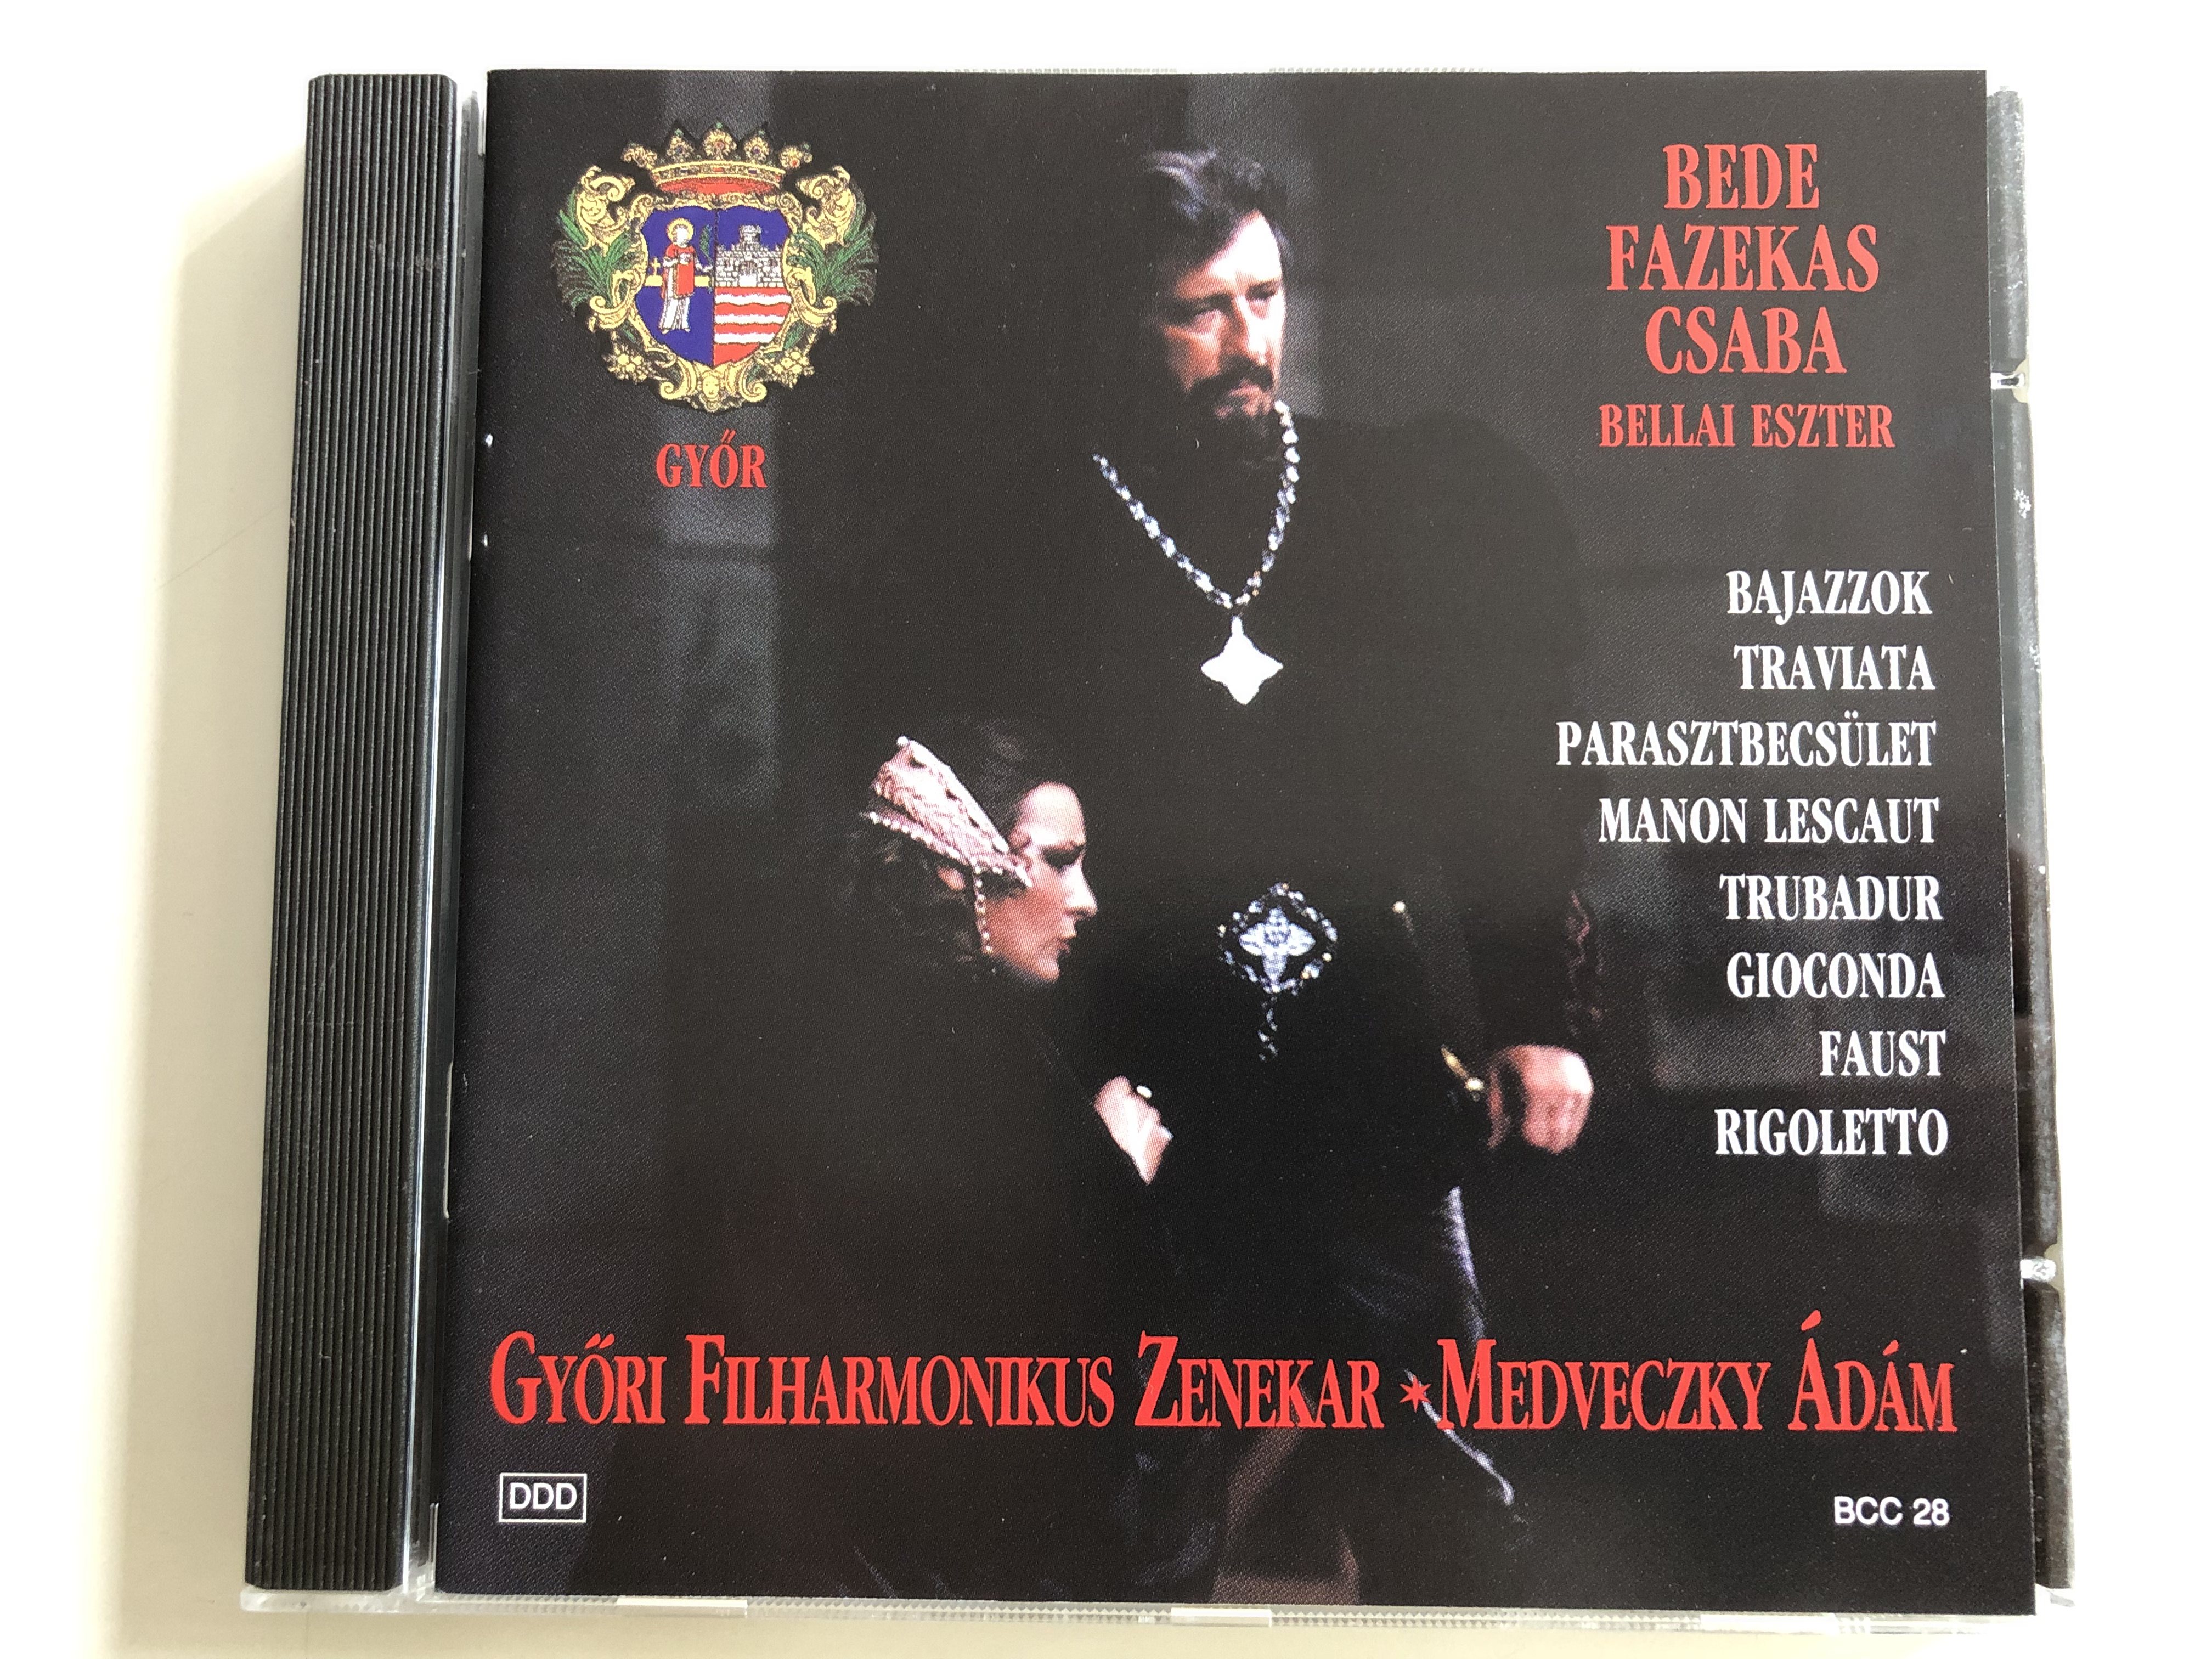 bede-fazekas-csaba-bellai-eszter-bajazzok-traviata-parasztbecs-let-manon-lescaut-trubadur-gioconda-faust-rigoletto-gy-ri-filharmonikus-zenekar-medveczky-d-m-ddd-audio-cd-1998-bcc-28-1-.jpg